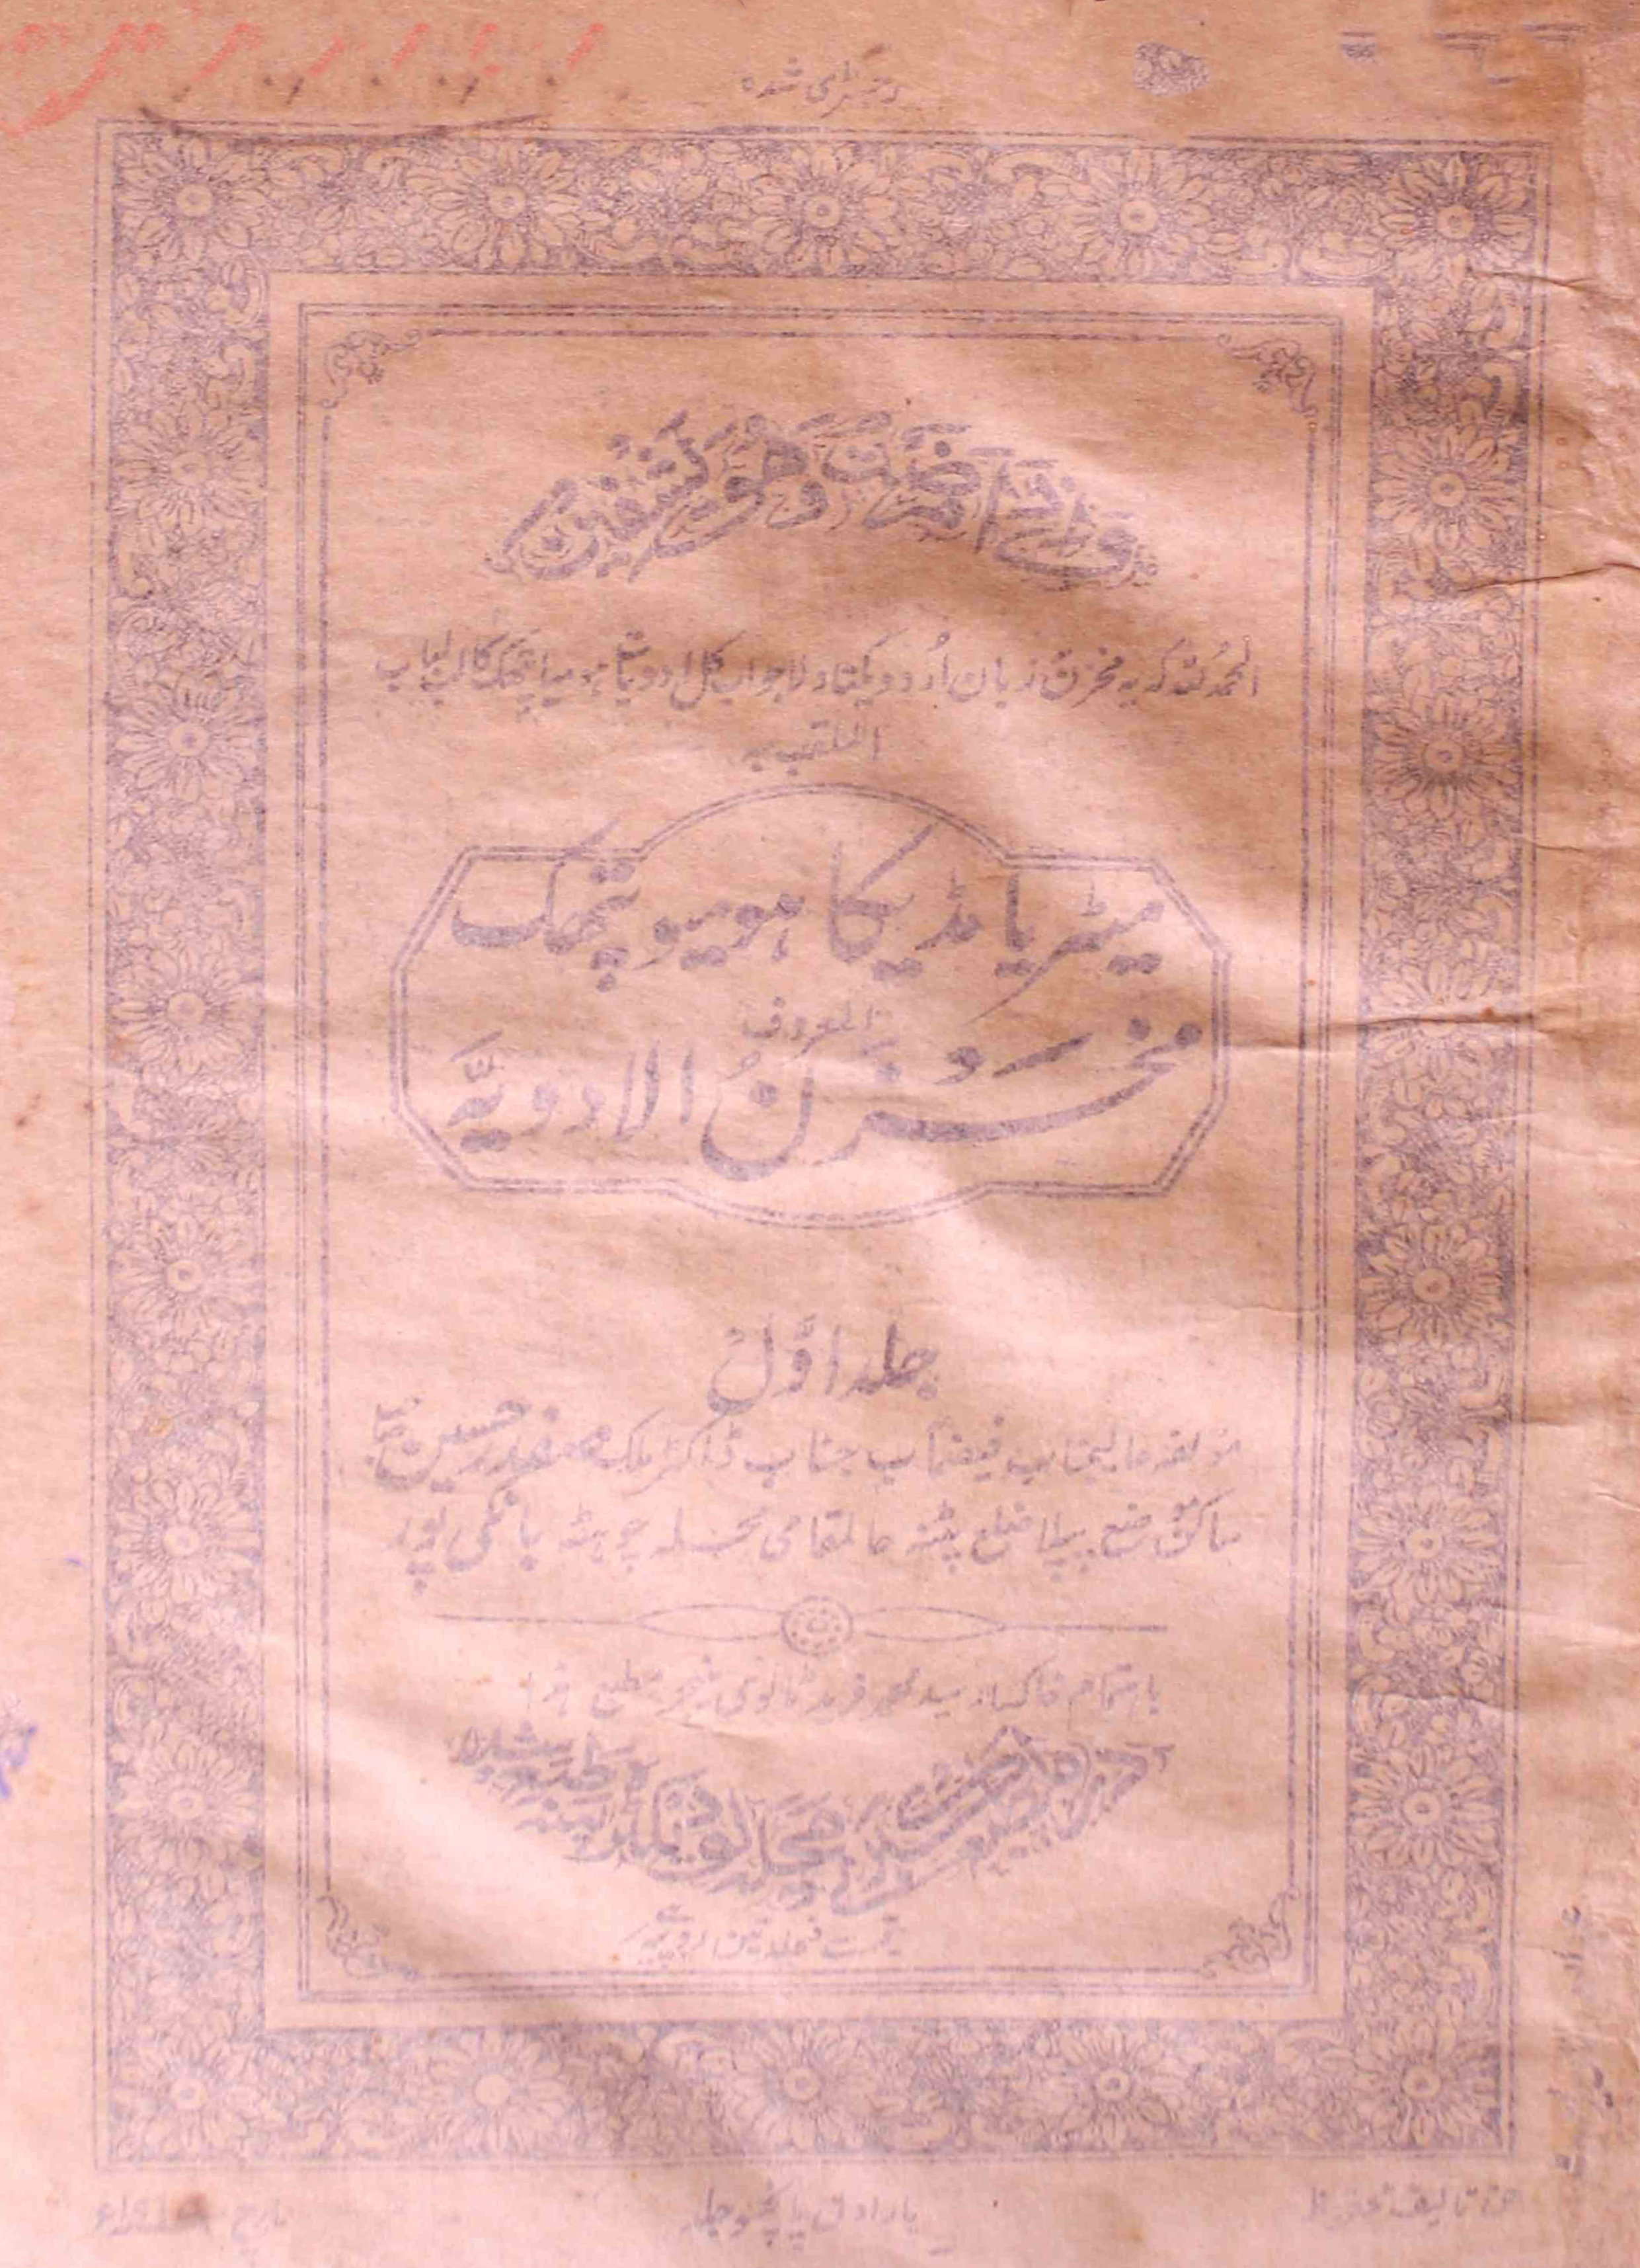 Makhzan-ul-Adviya